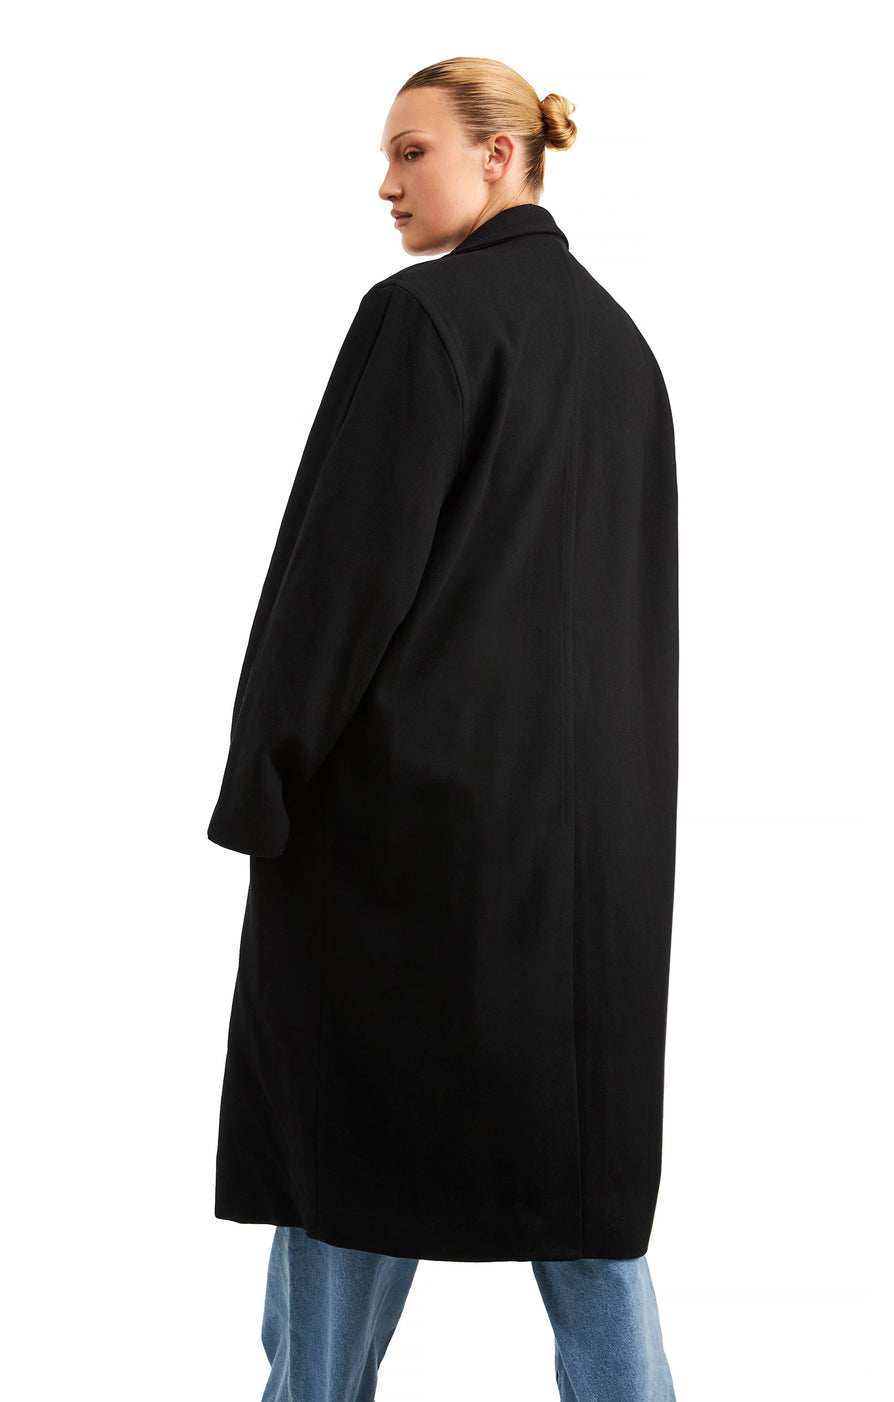 THE LEON BLACK COAT | model